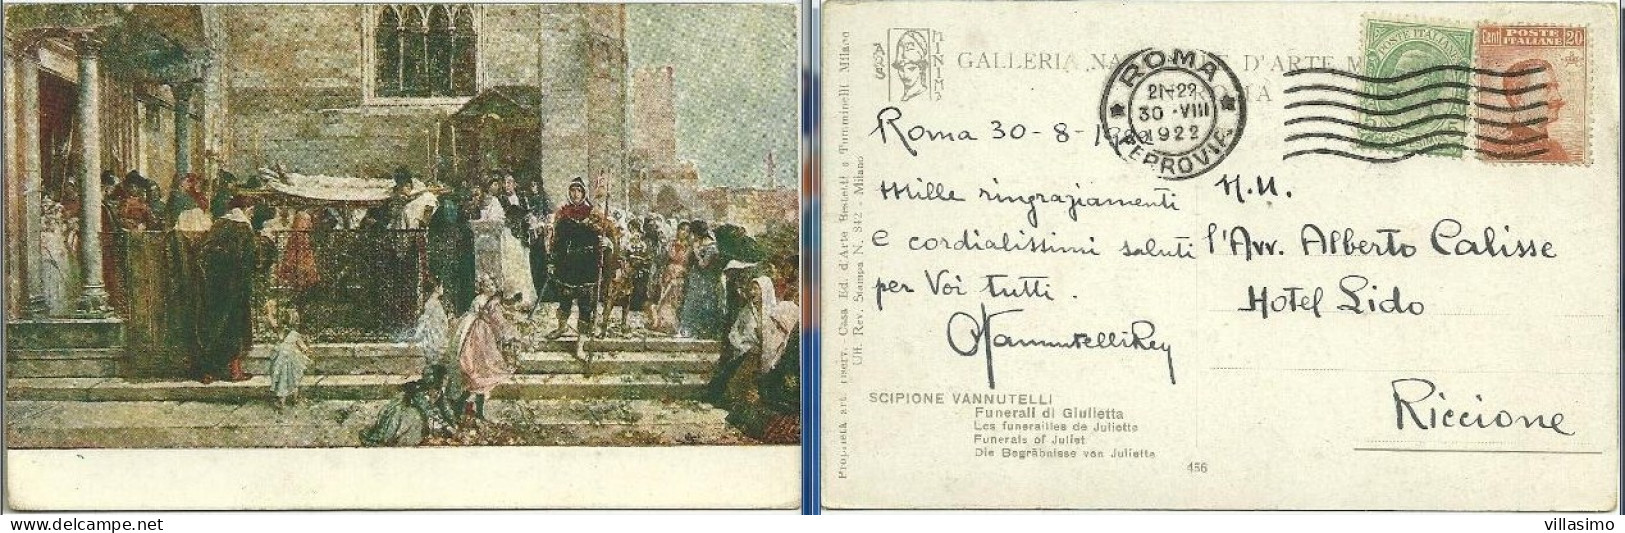 Galleria Nazionale D’Arte Moderna In Roma - Scipione Vannutelli - Funerali Di Giulietta - V. 1922 - Pintura & Cuadros